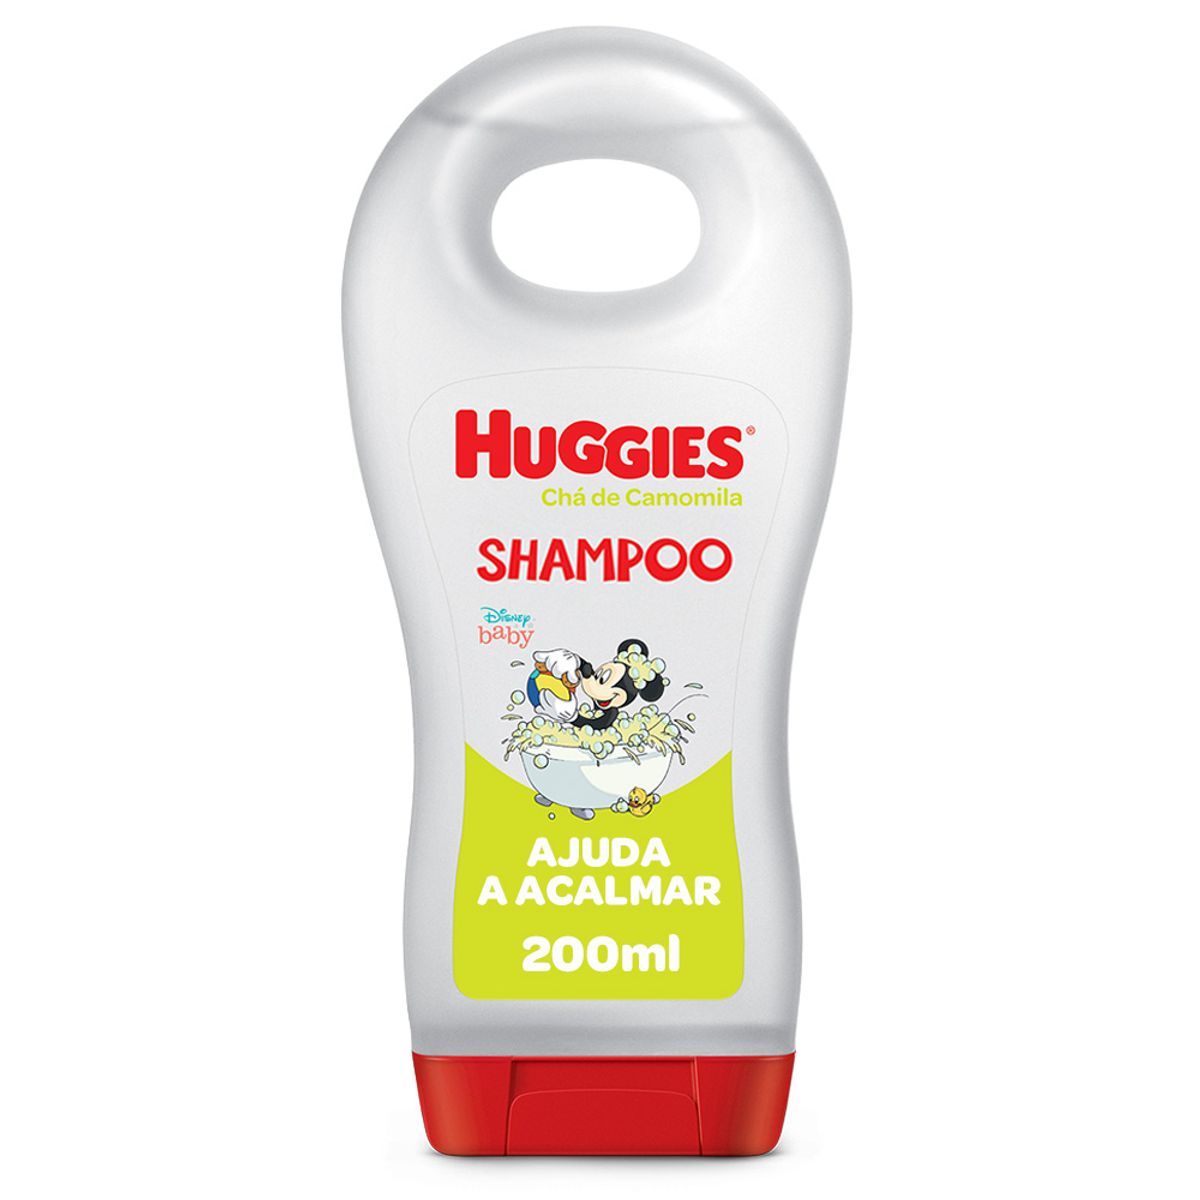 Shampoo Huggies Chá de Camomila - 200 ml image number 0